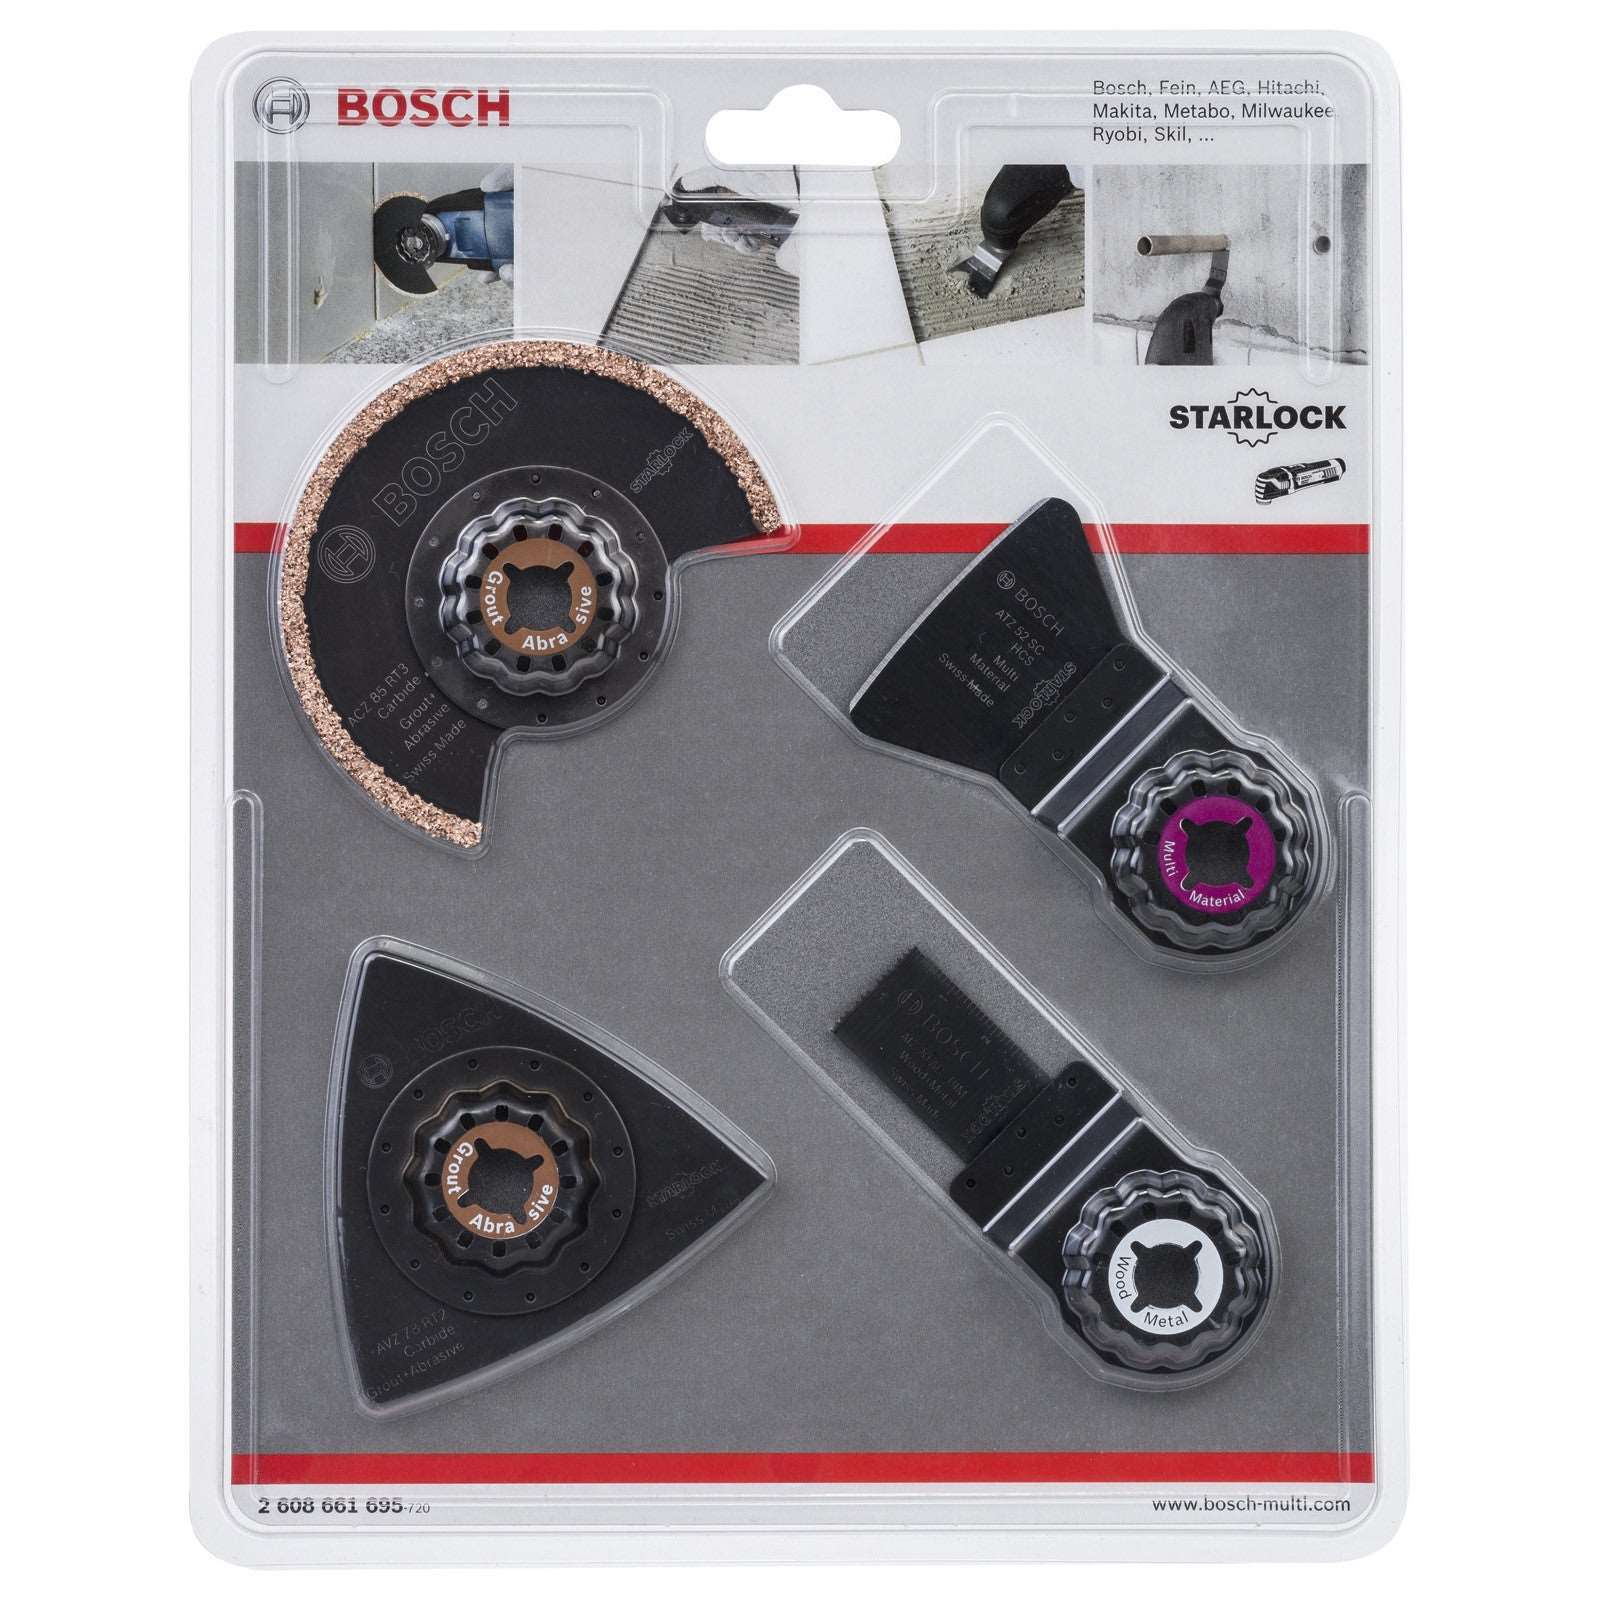 Bosch Multi Tool Blades 4-piece tile set 2608661695 Power Tool Services